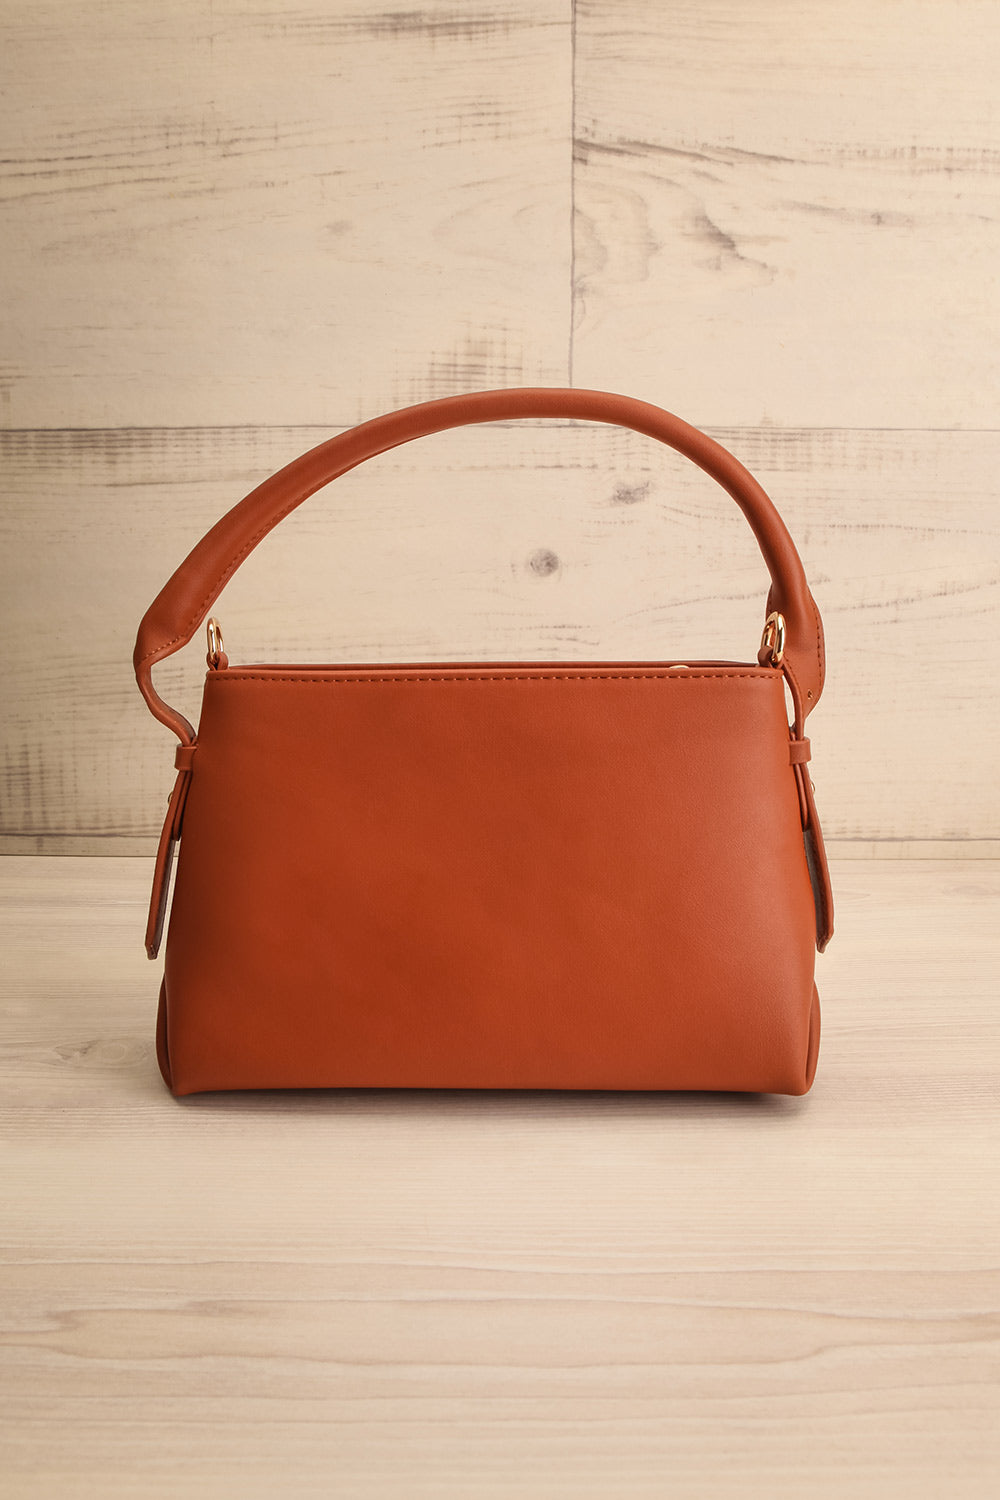 Rhubarbe Brown Small Crossbody Handbag | La petite garçonne front view